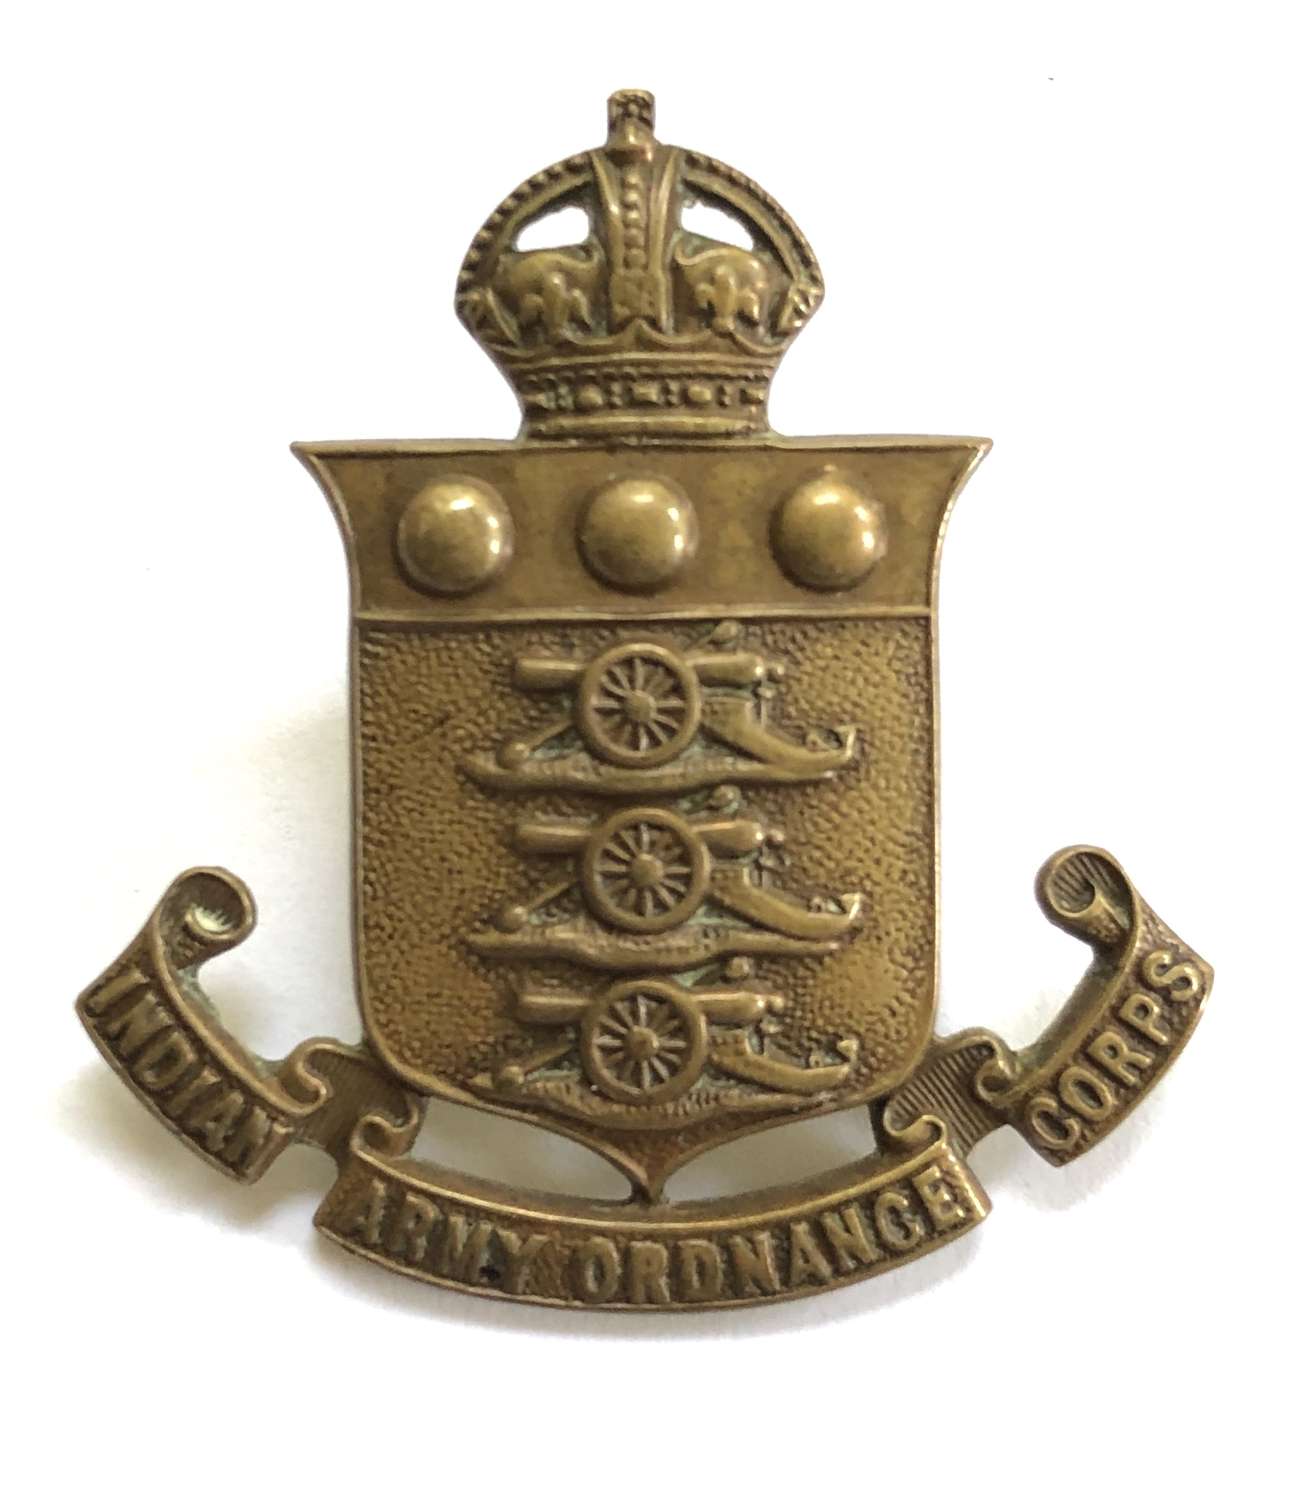 Indian Army Ordnance Corps cap badge circa 1922-47